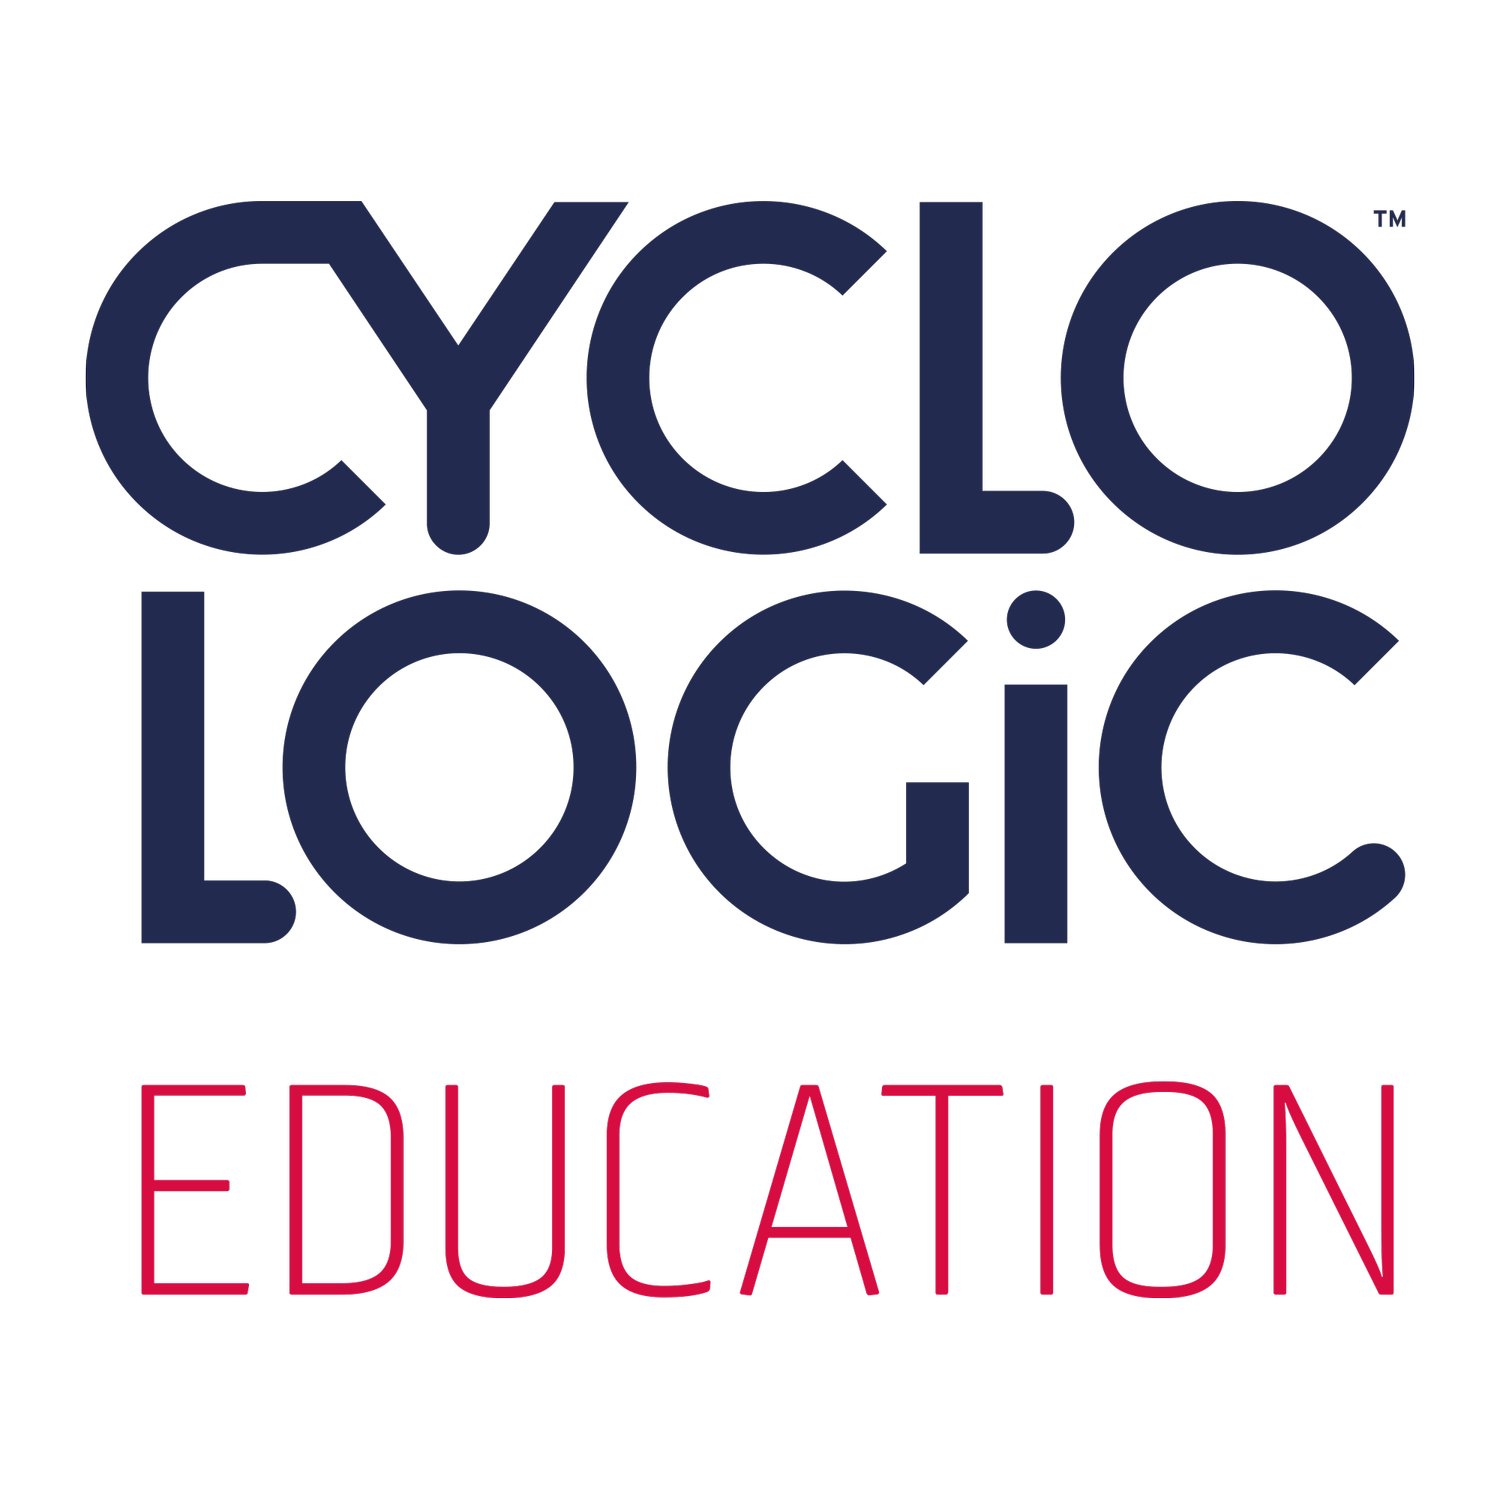 Cyclologic Education